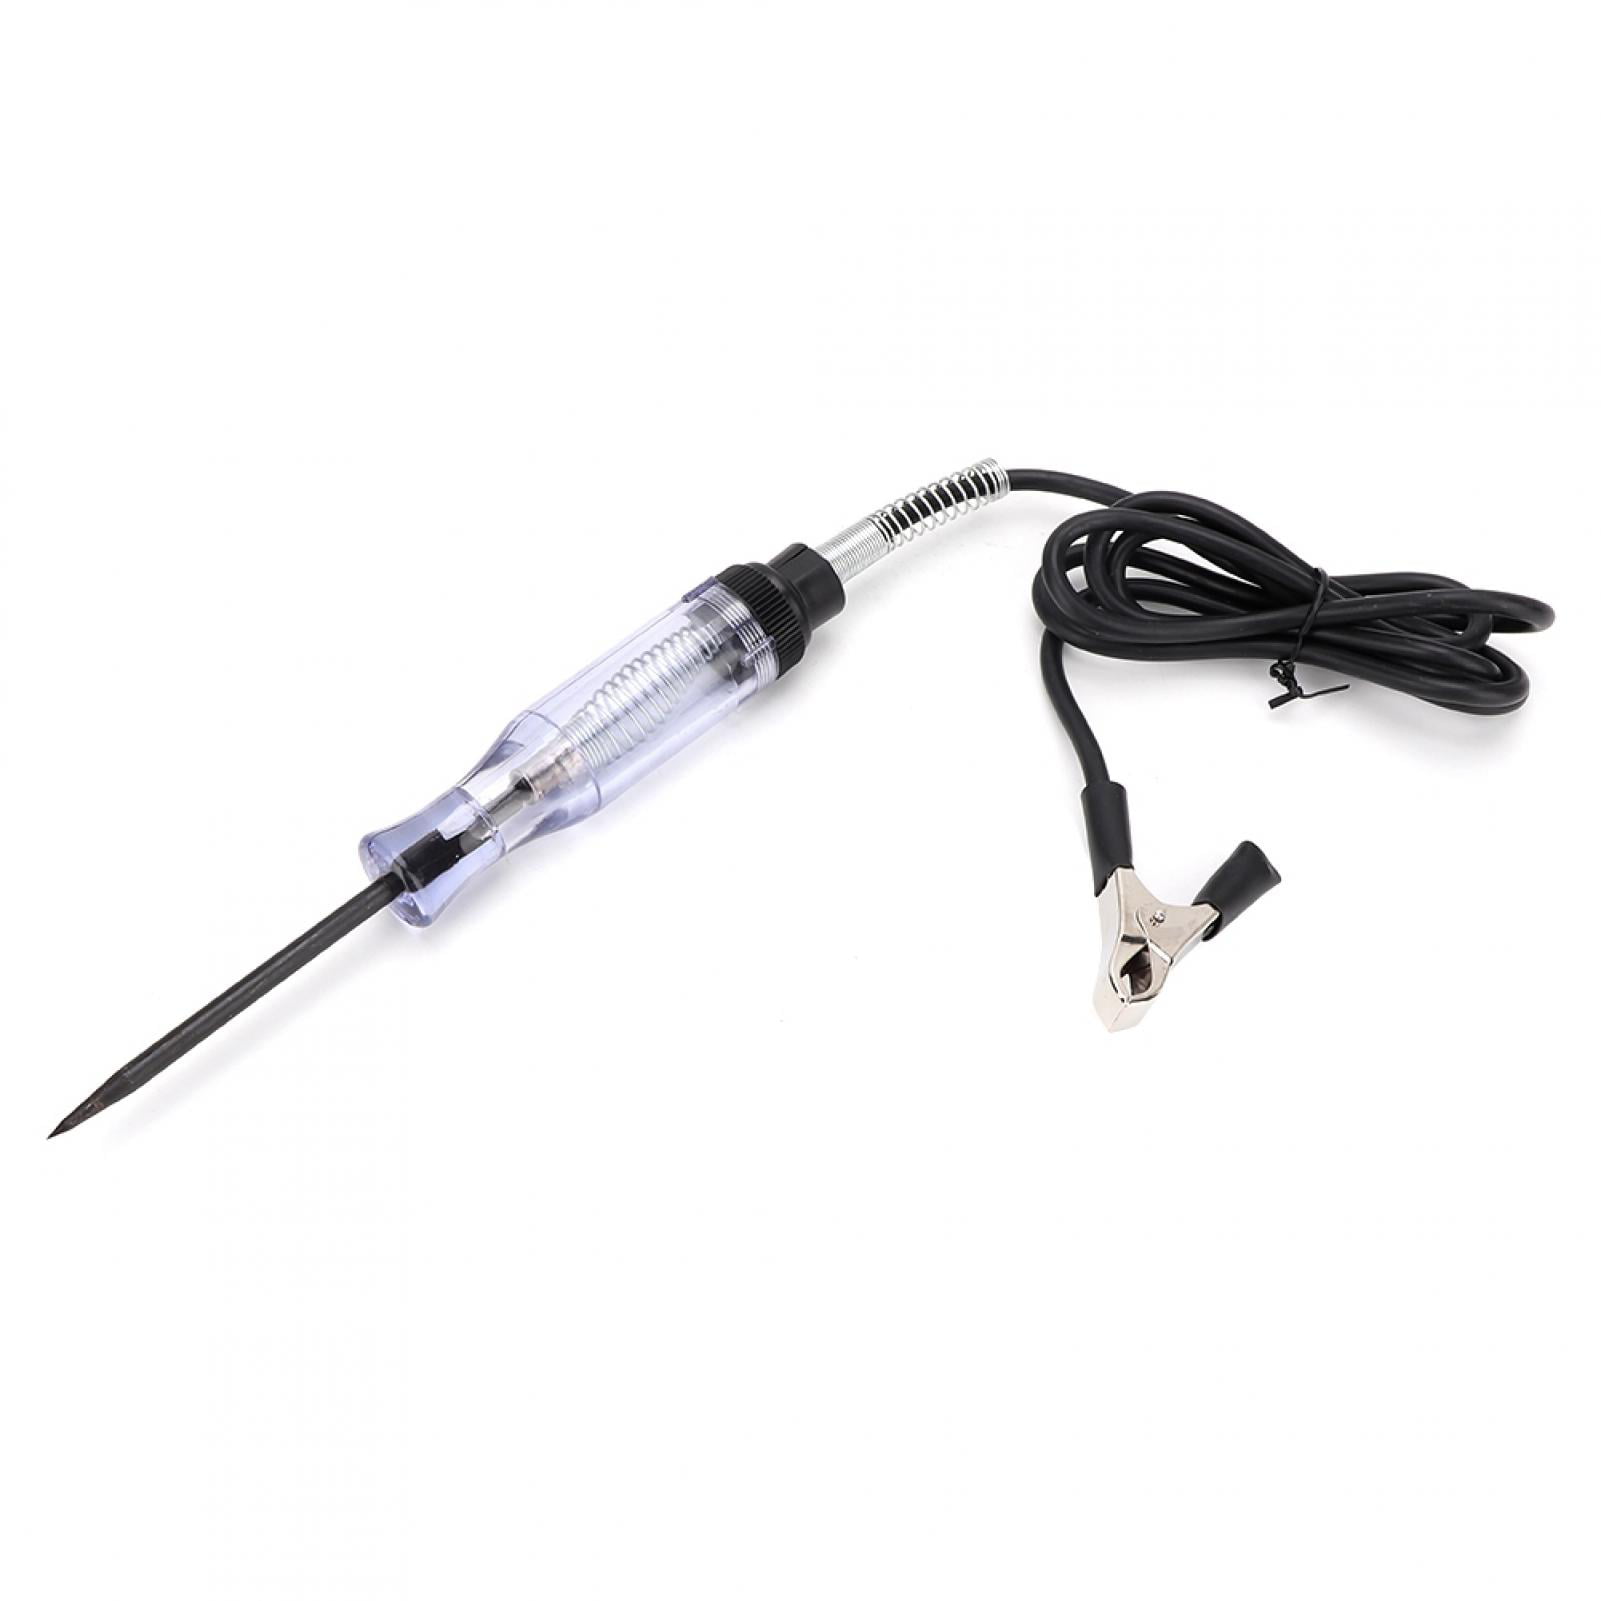 Car Auto Electrical Voltage Test Pen Light Lamp Circuit Tester Detector Probe 